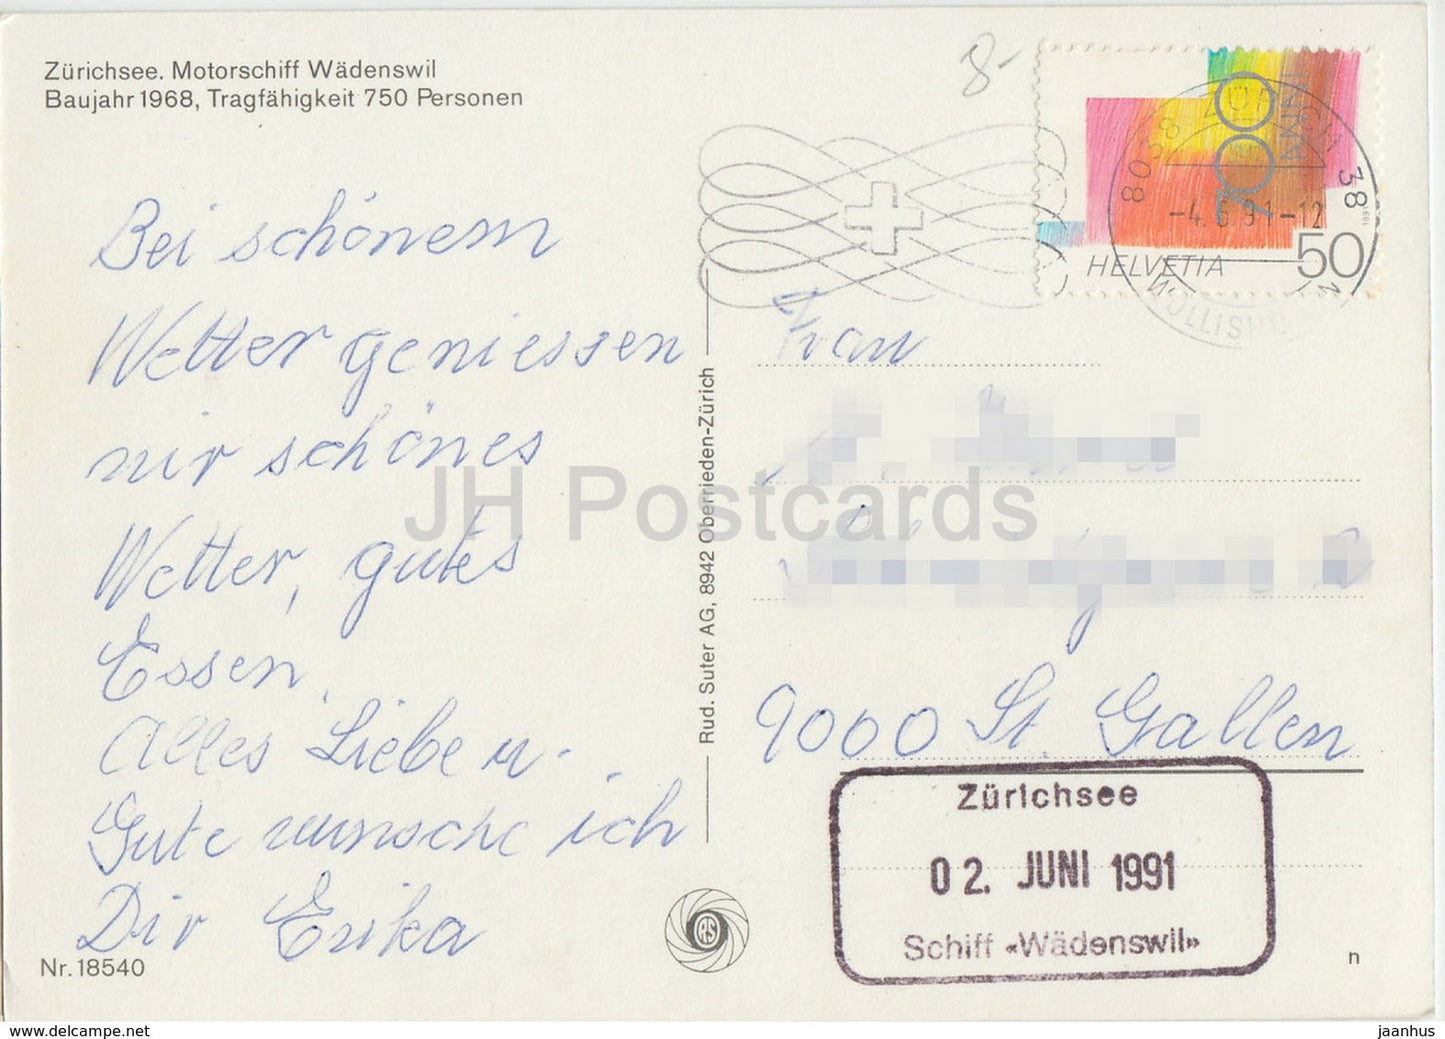 Zurichsee - motorschiff Wadenswil - bateau à passagers - 18540 - 1991 - Suisse - d'occasion